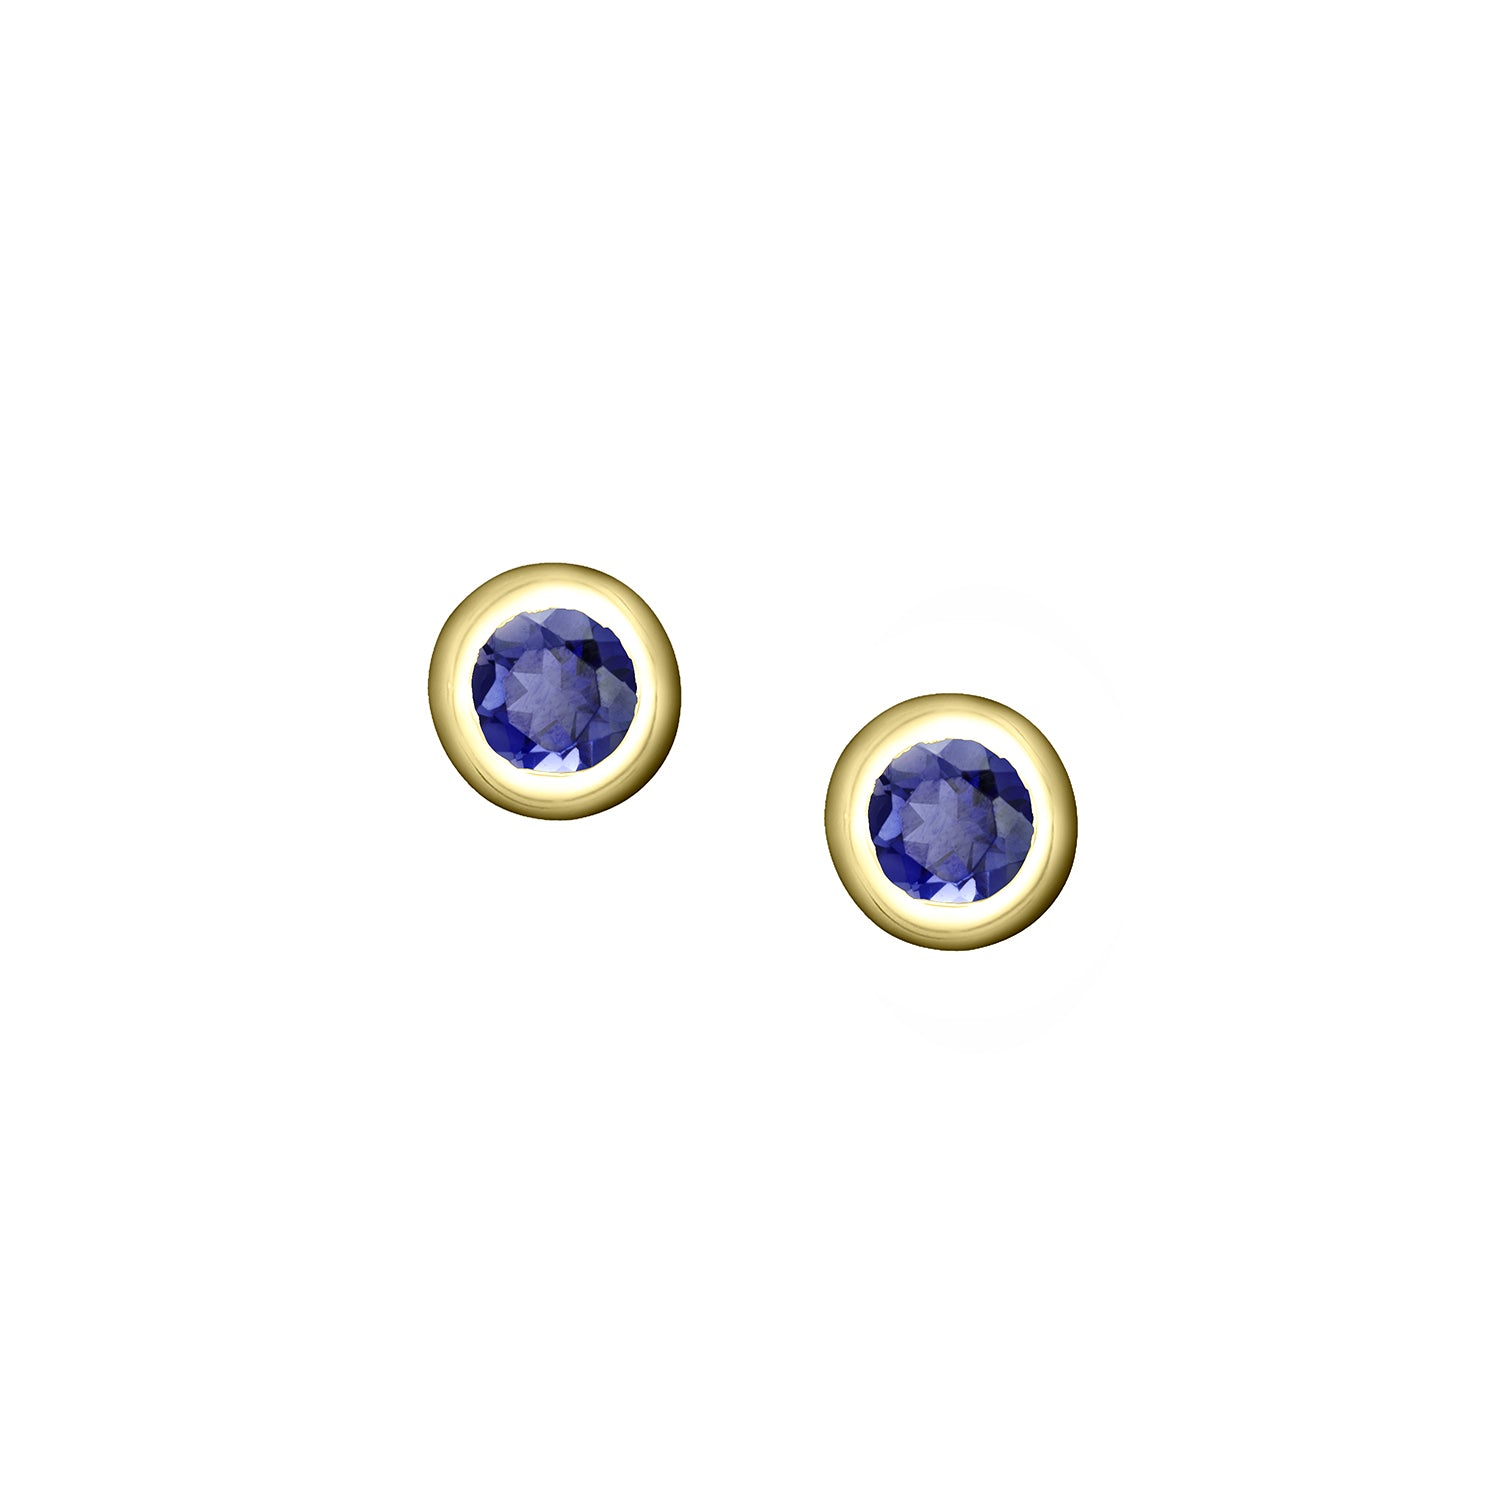 Polished Gold Vermeil Crescent Moon Birthstone Earrings - September / Iolite